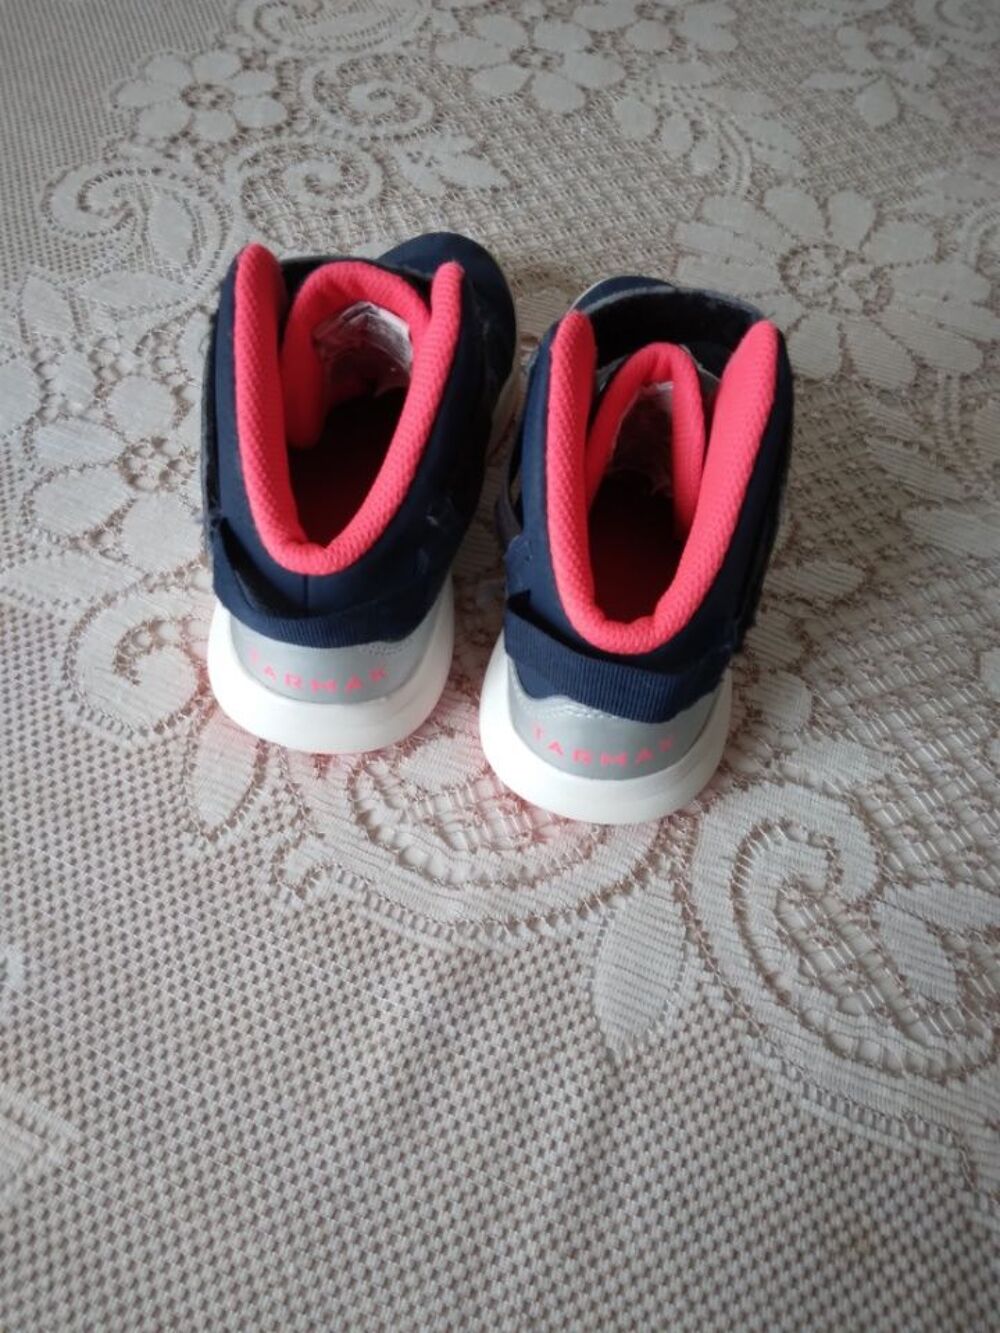 Chaussures de basketball marine rose t 34 Chaussures enfants